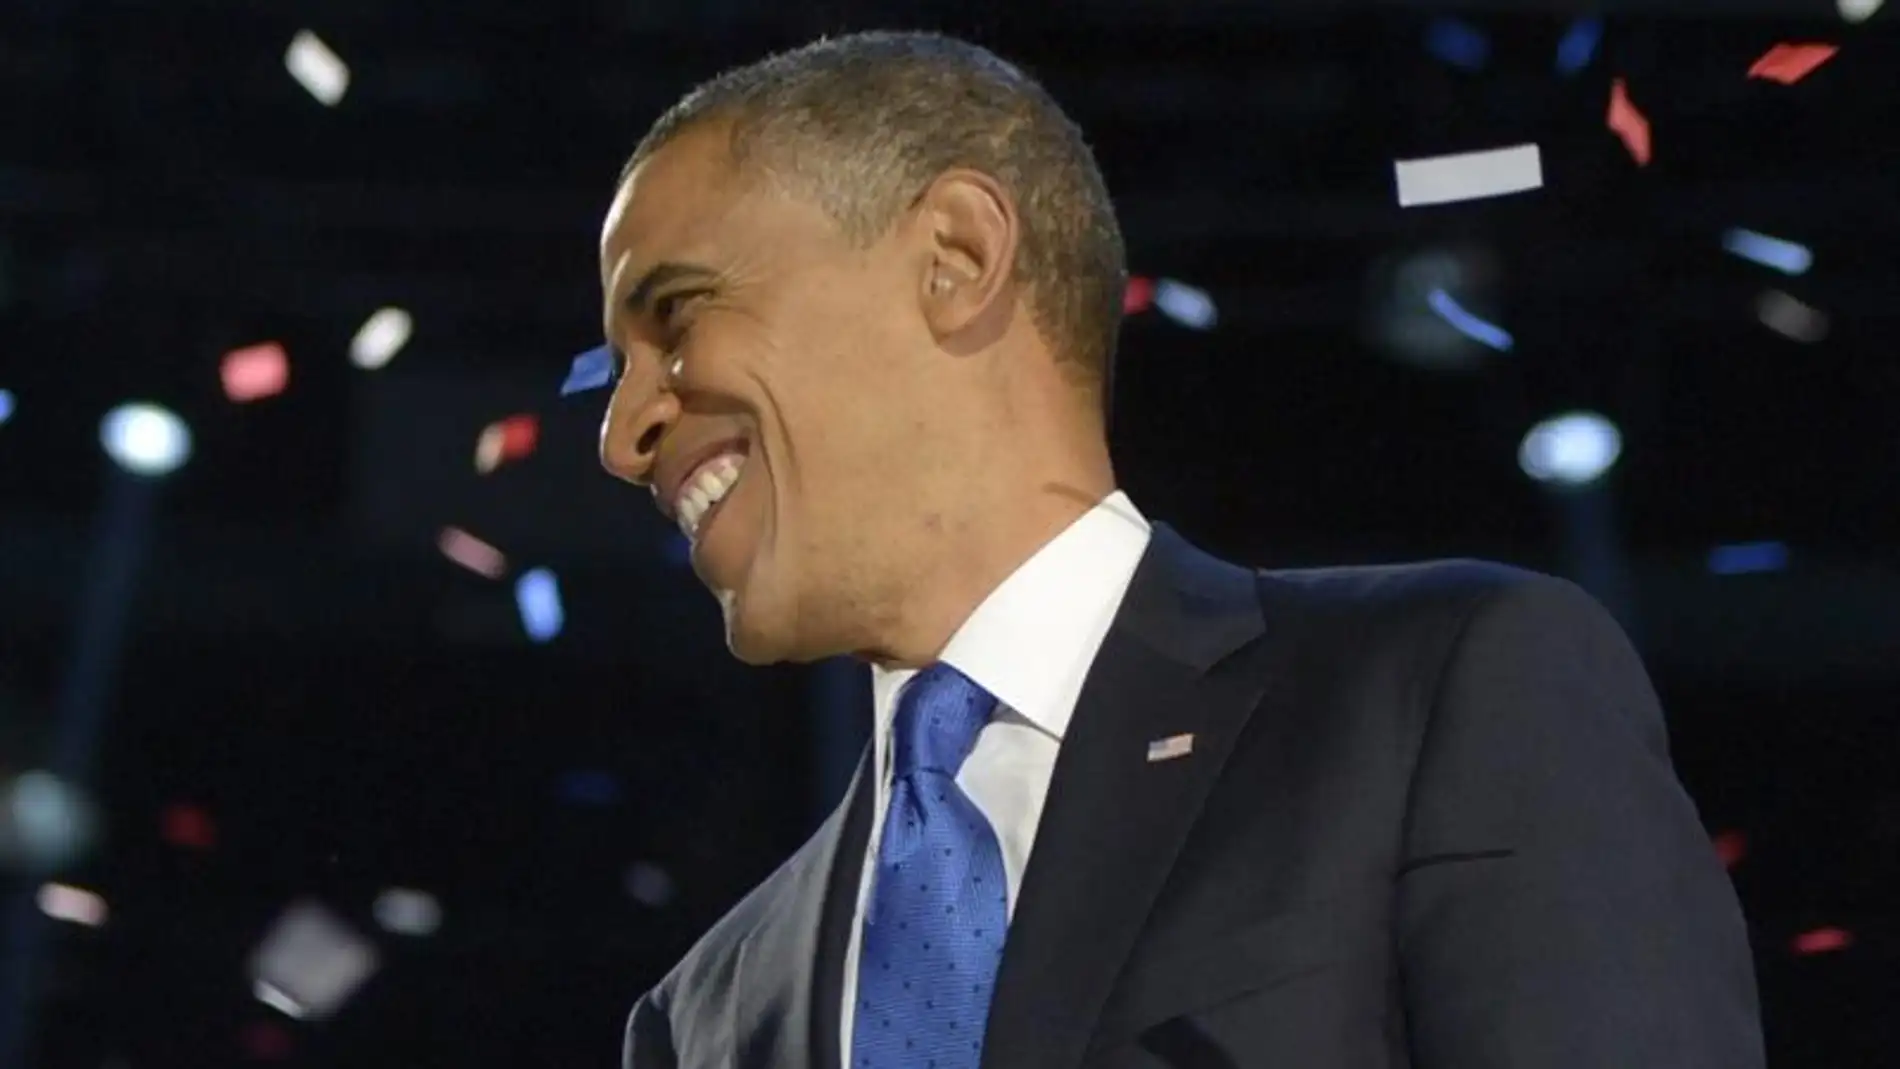 Barack Obama tras pronunciar el discurso de la victoria